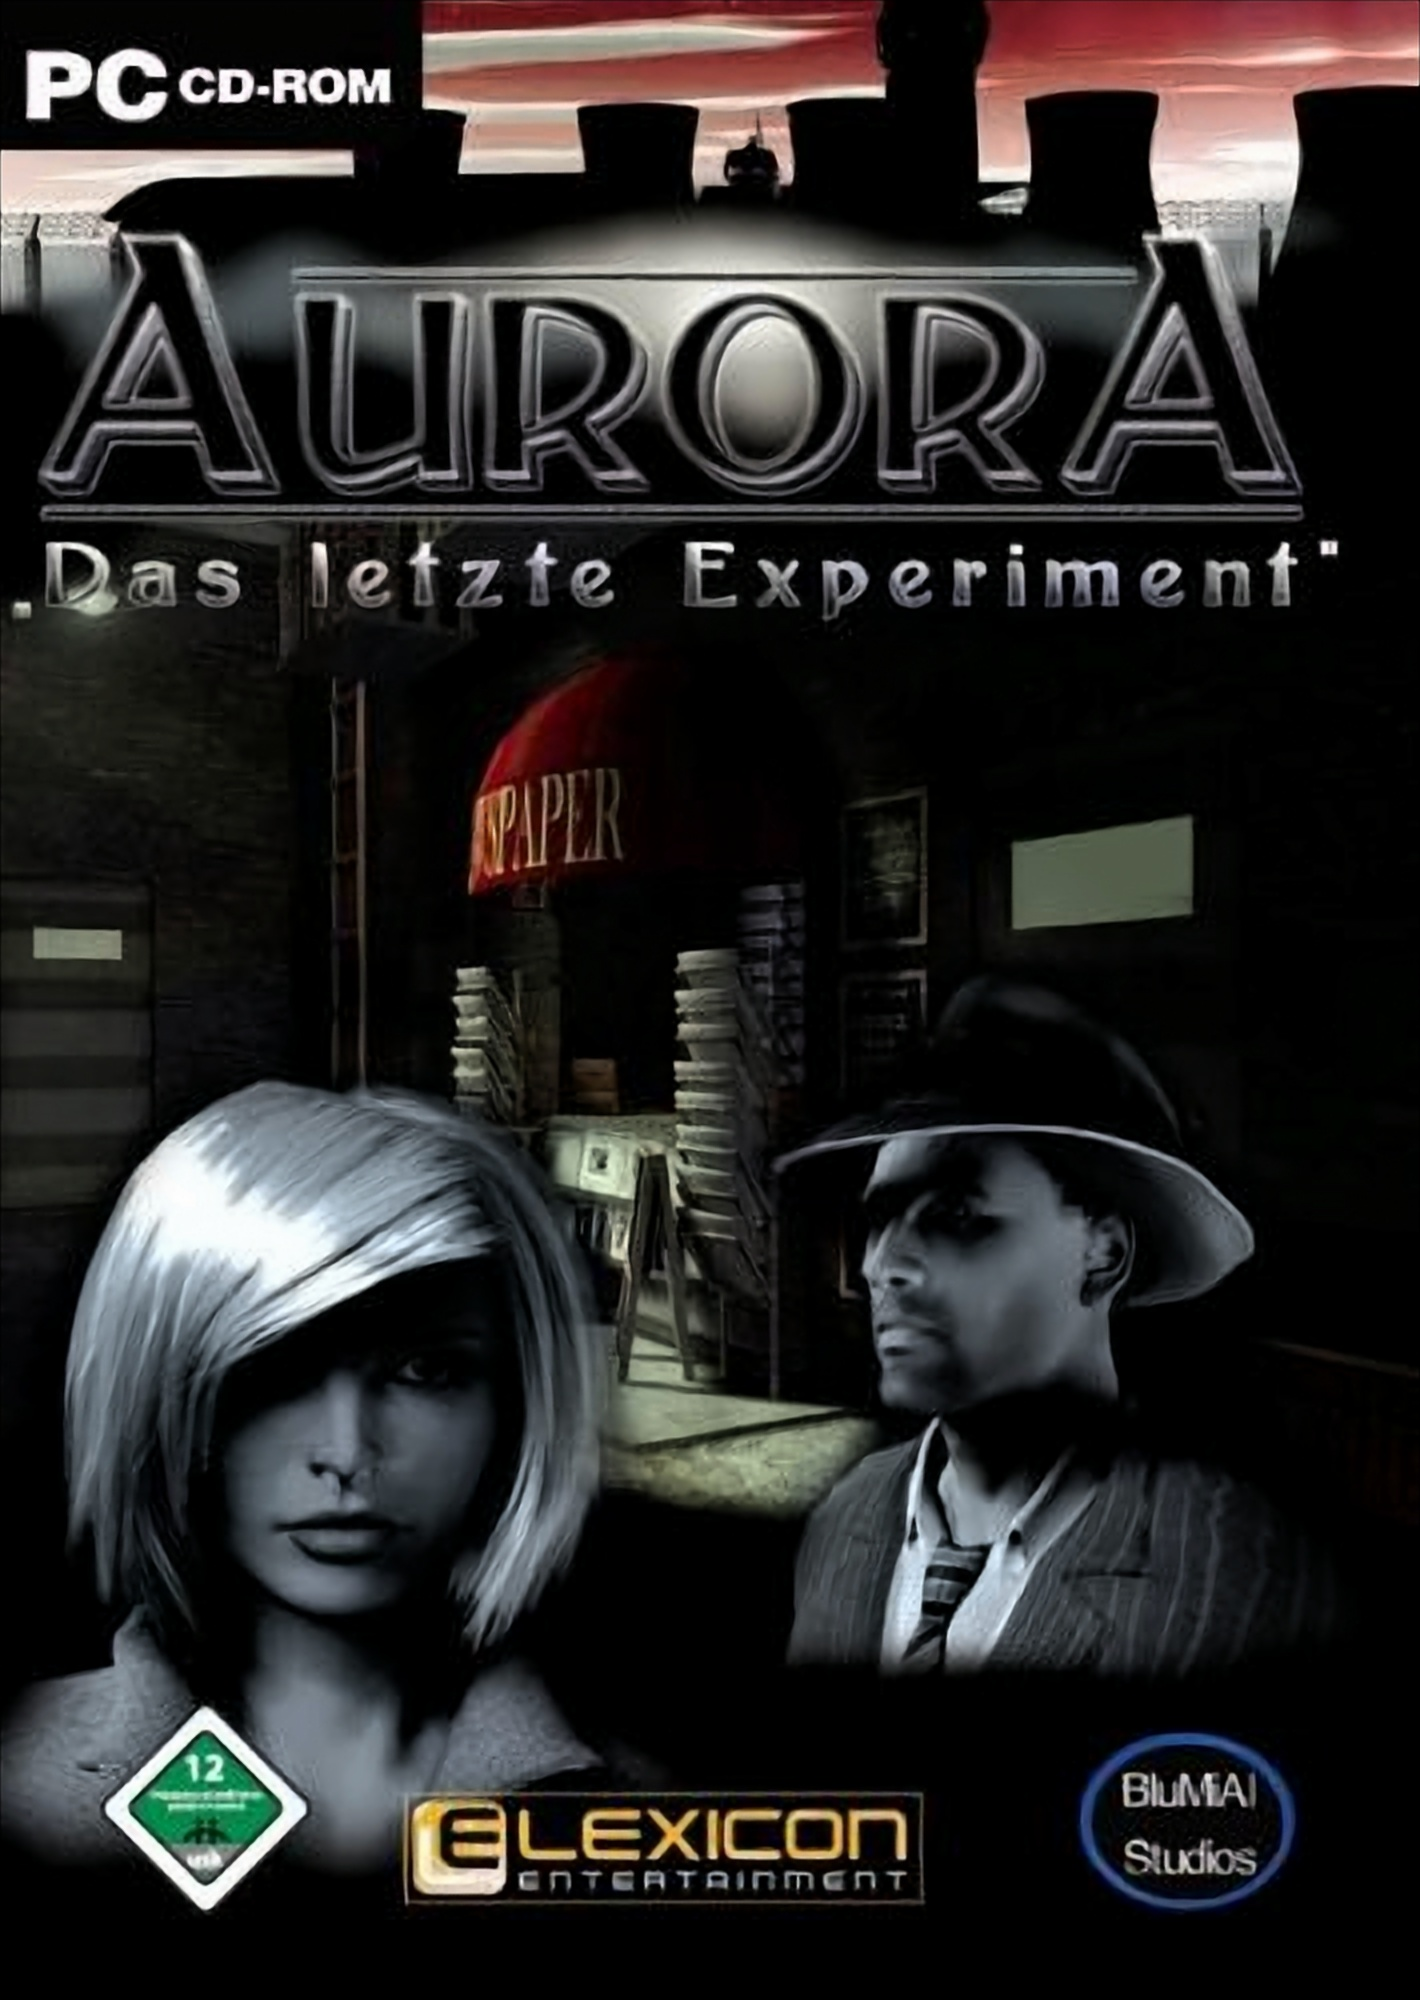 - [PC] Das - Experiment Aurora letzte